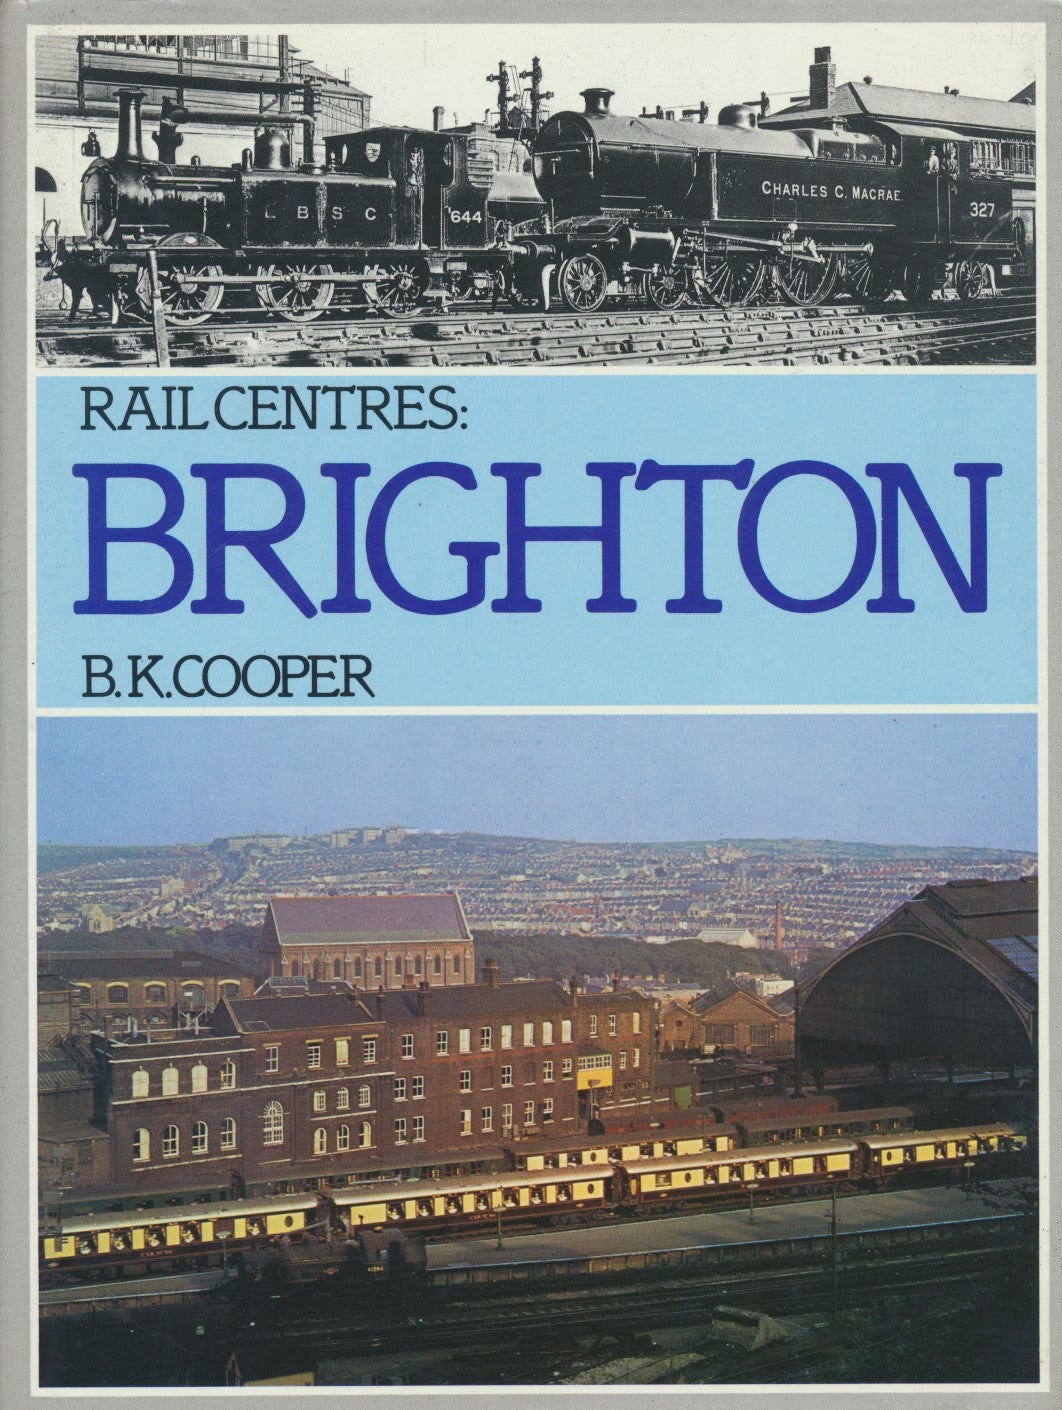 Rail Centres: Brighton